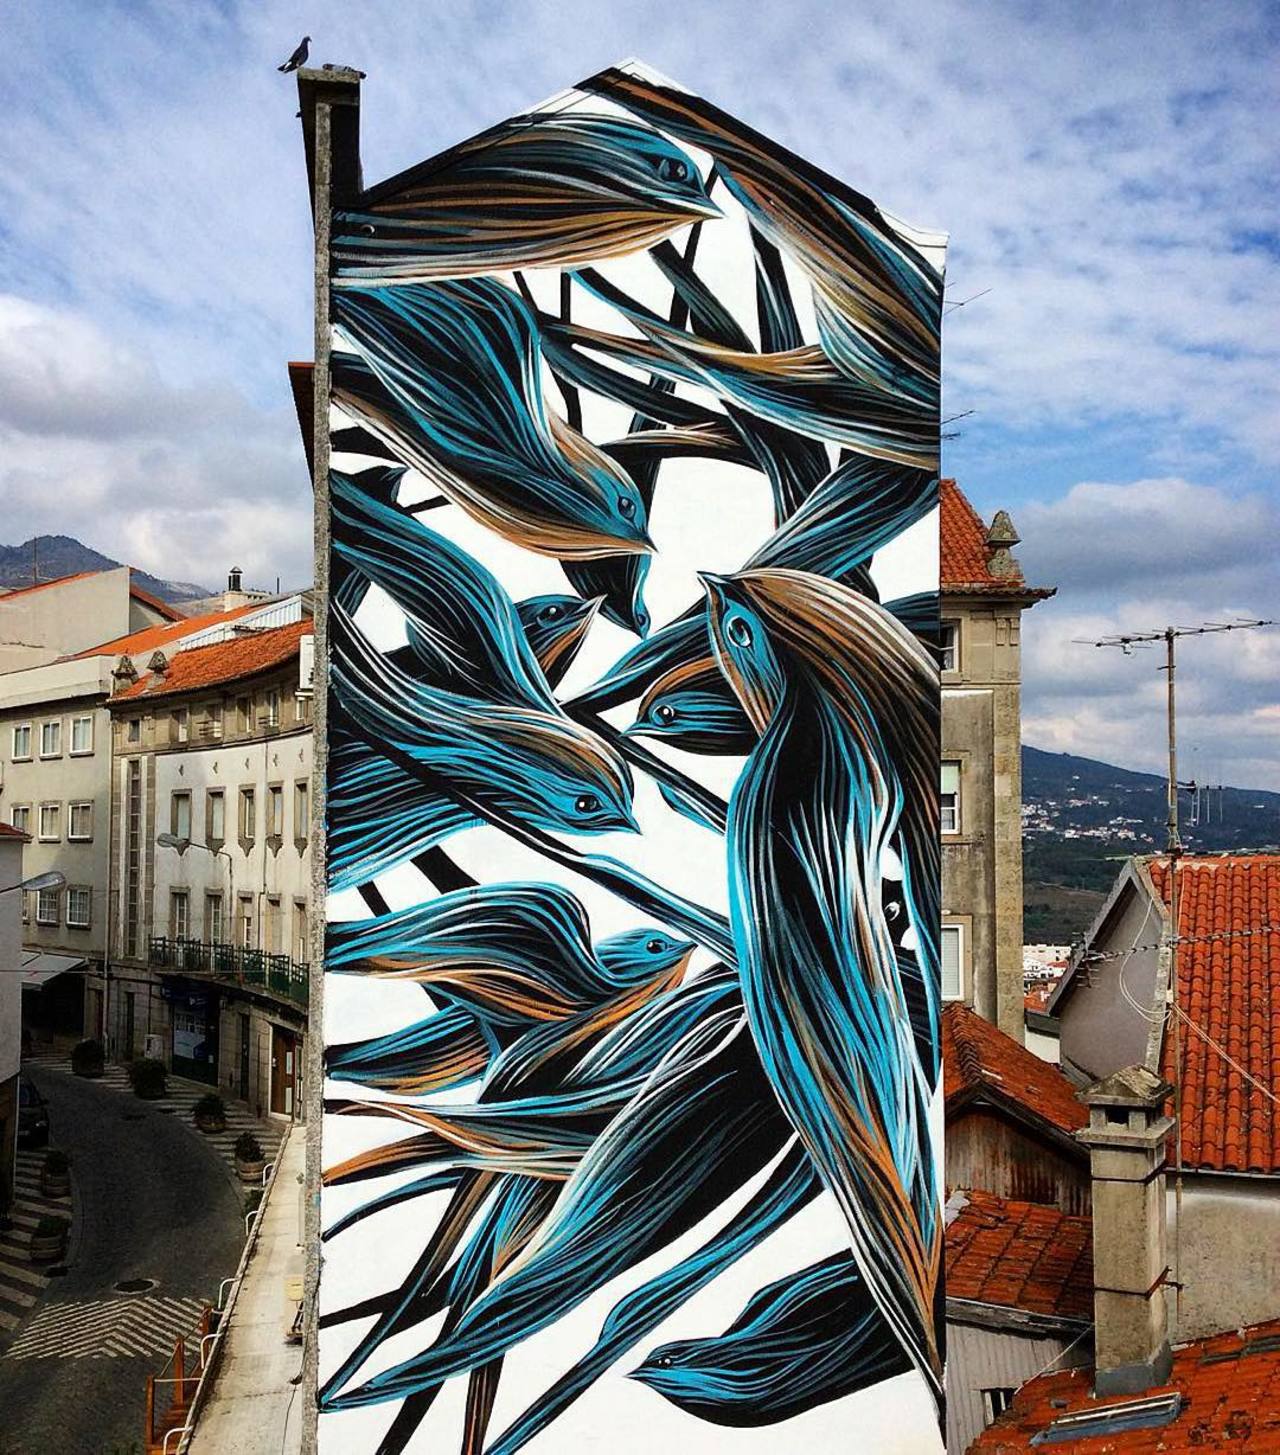 Something new from Pantonio in Covilhã, Portugal. #StreetArt #Graffiti #Mural https://t.co/FdsASDCxhw